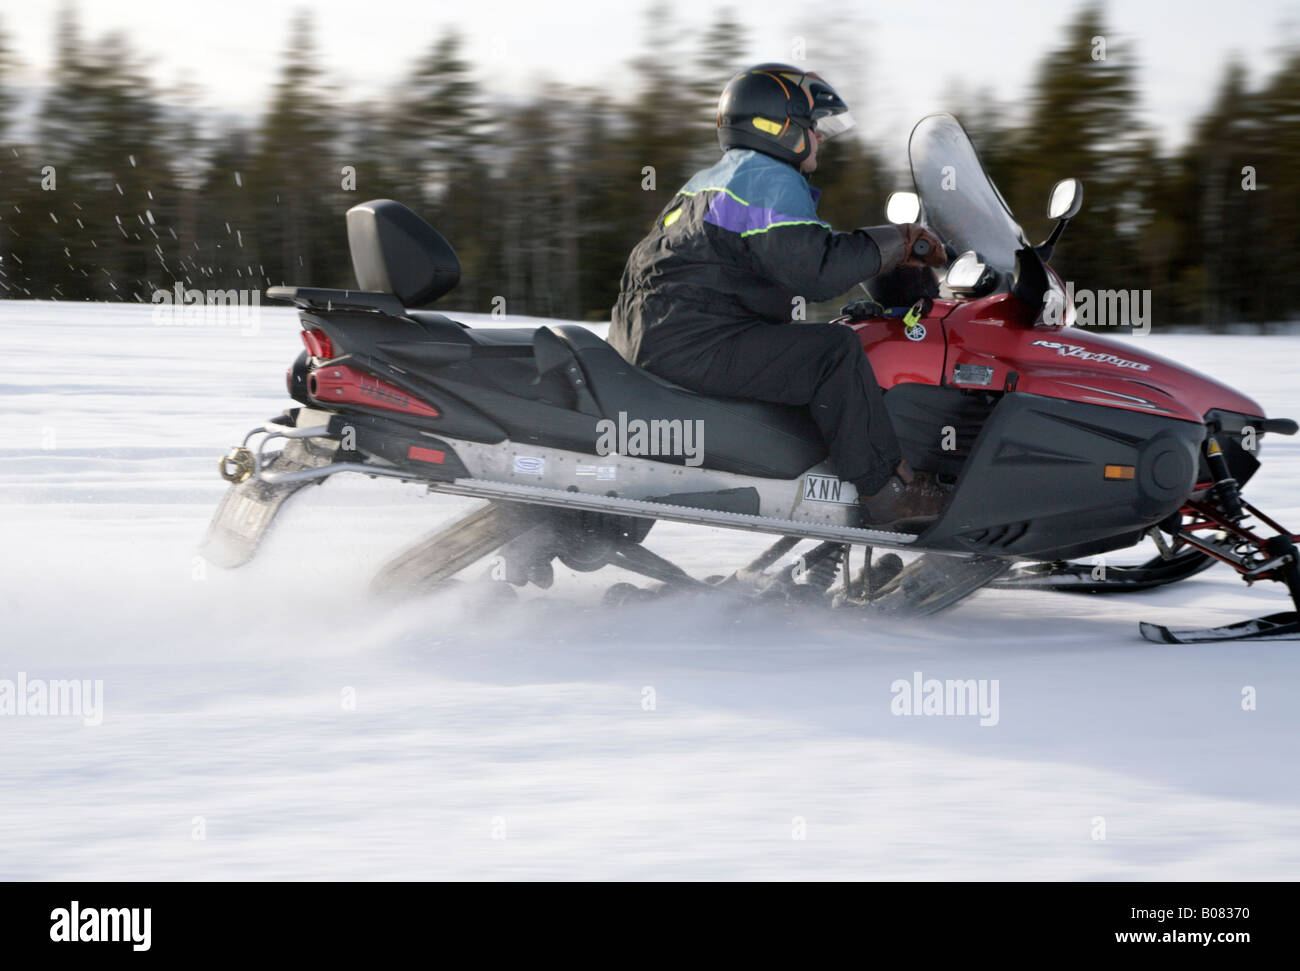 A men in protective sportswear riding snowmobile Branas Ski Resort